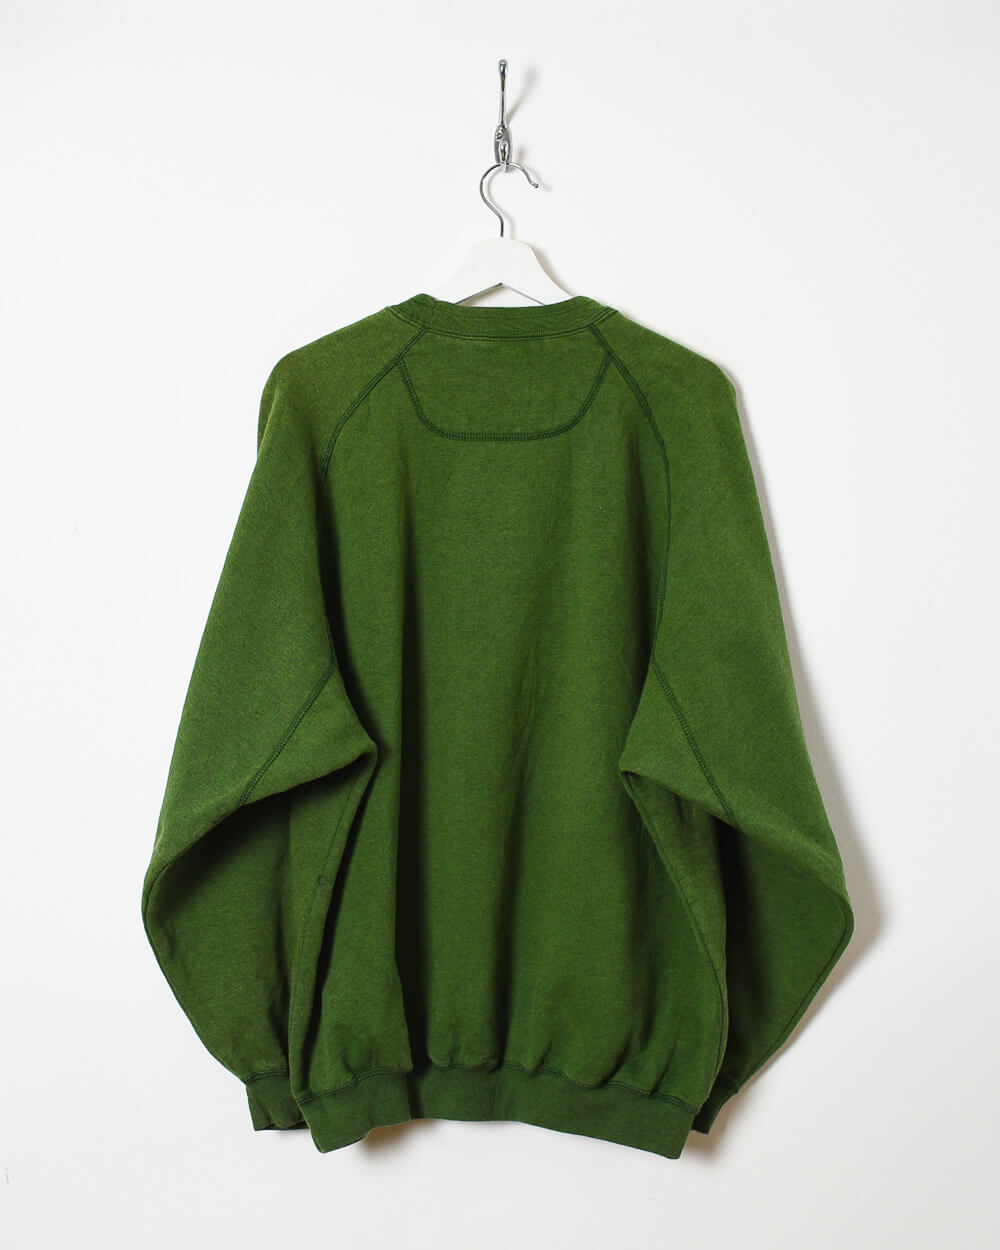 Vintage 90s Cotton Mix Green Adidas Sweatshirt - X-Large – Domno 